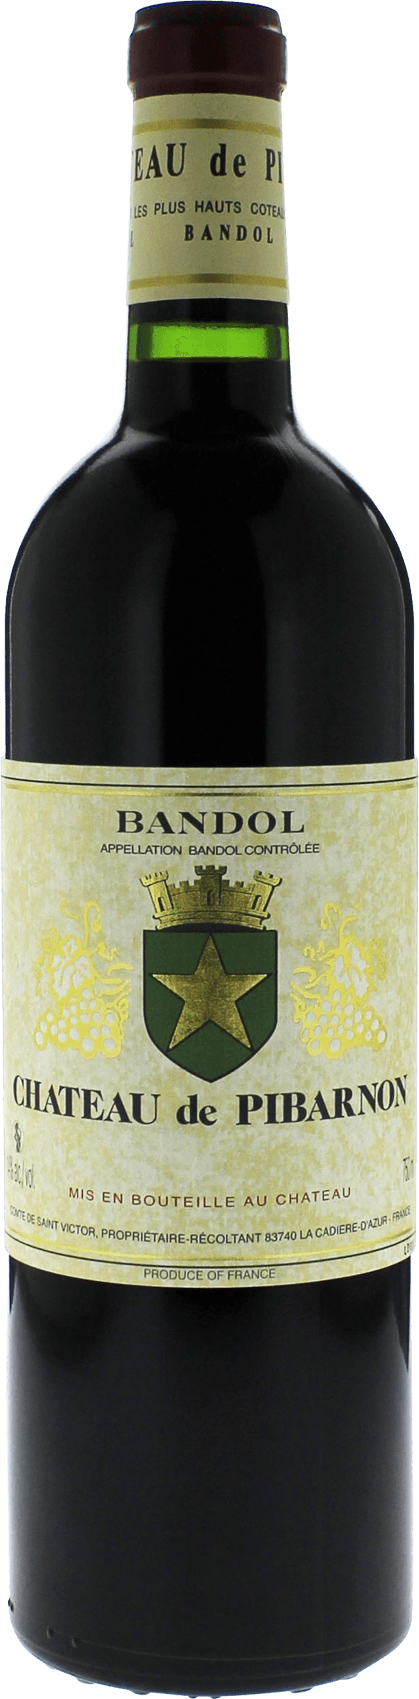 Bandol domaine de pibarnon (rouge) 2014  Bandol, Slection provence rouge